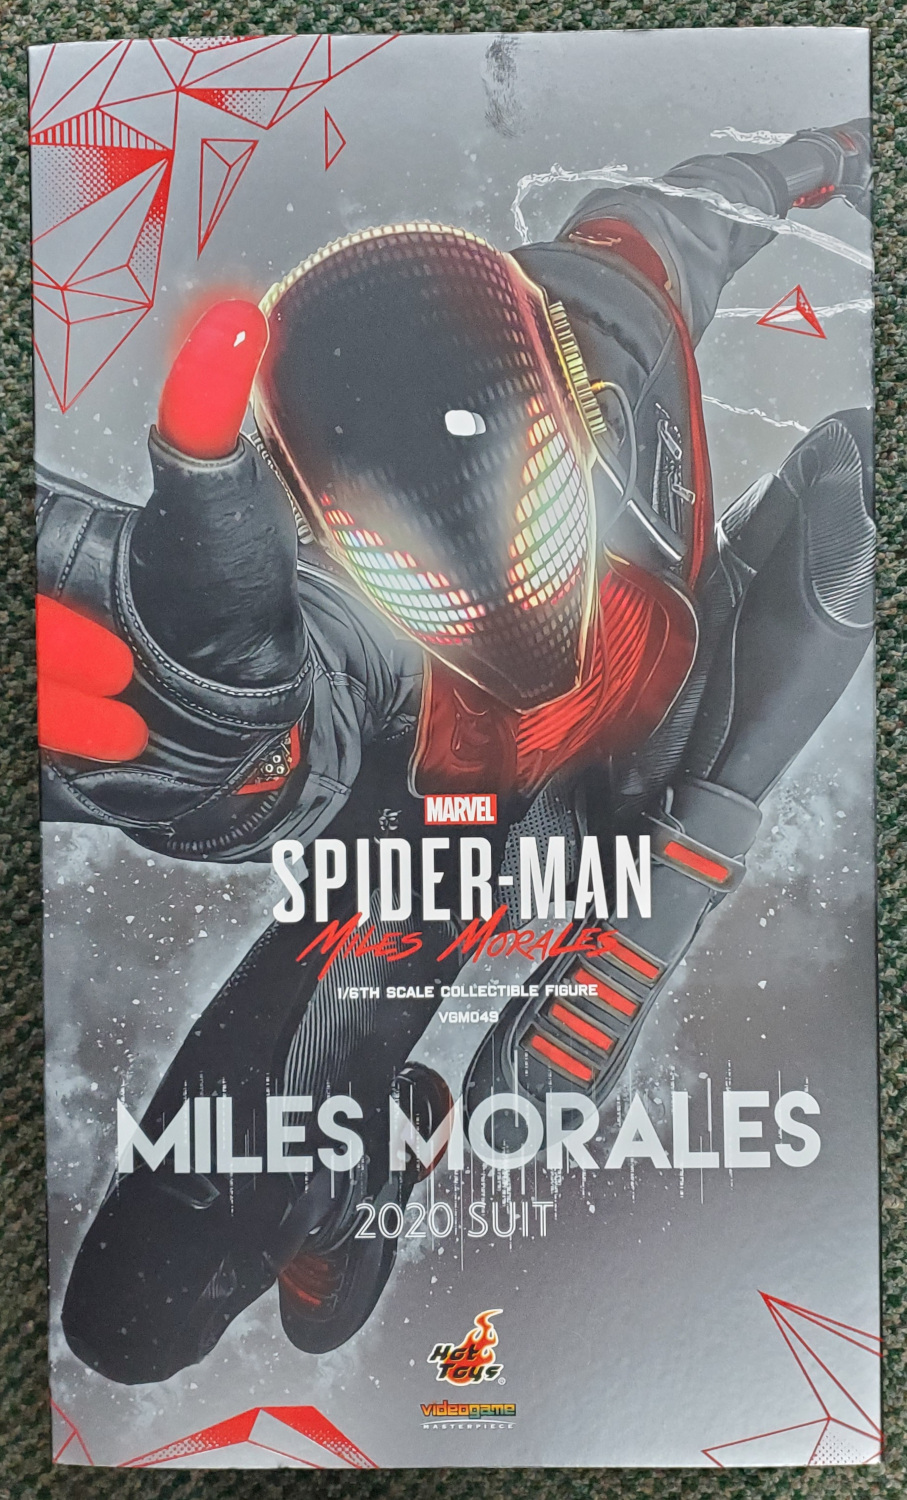 Hot Toys Spider-Man Miles Morales 2020 Suit 1:6 Scale Figure 1